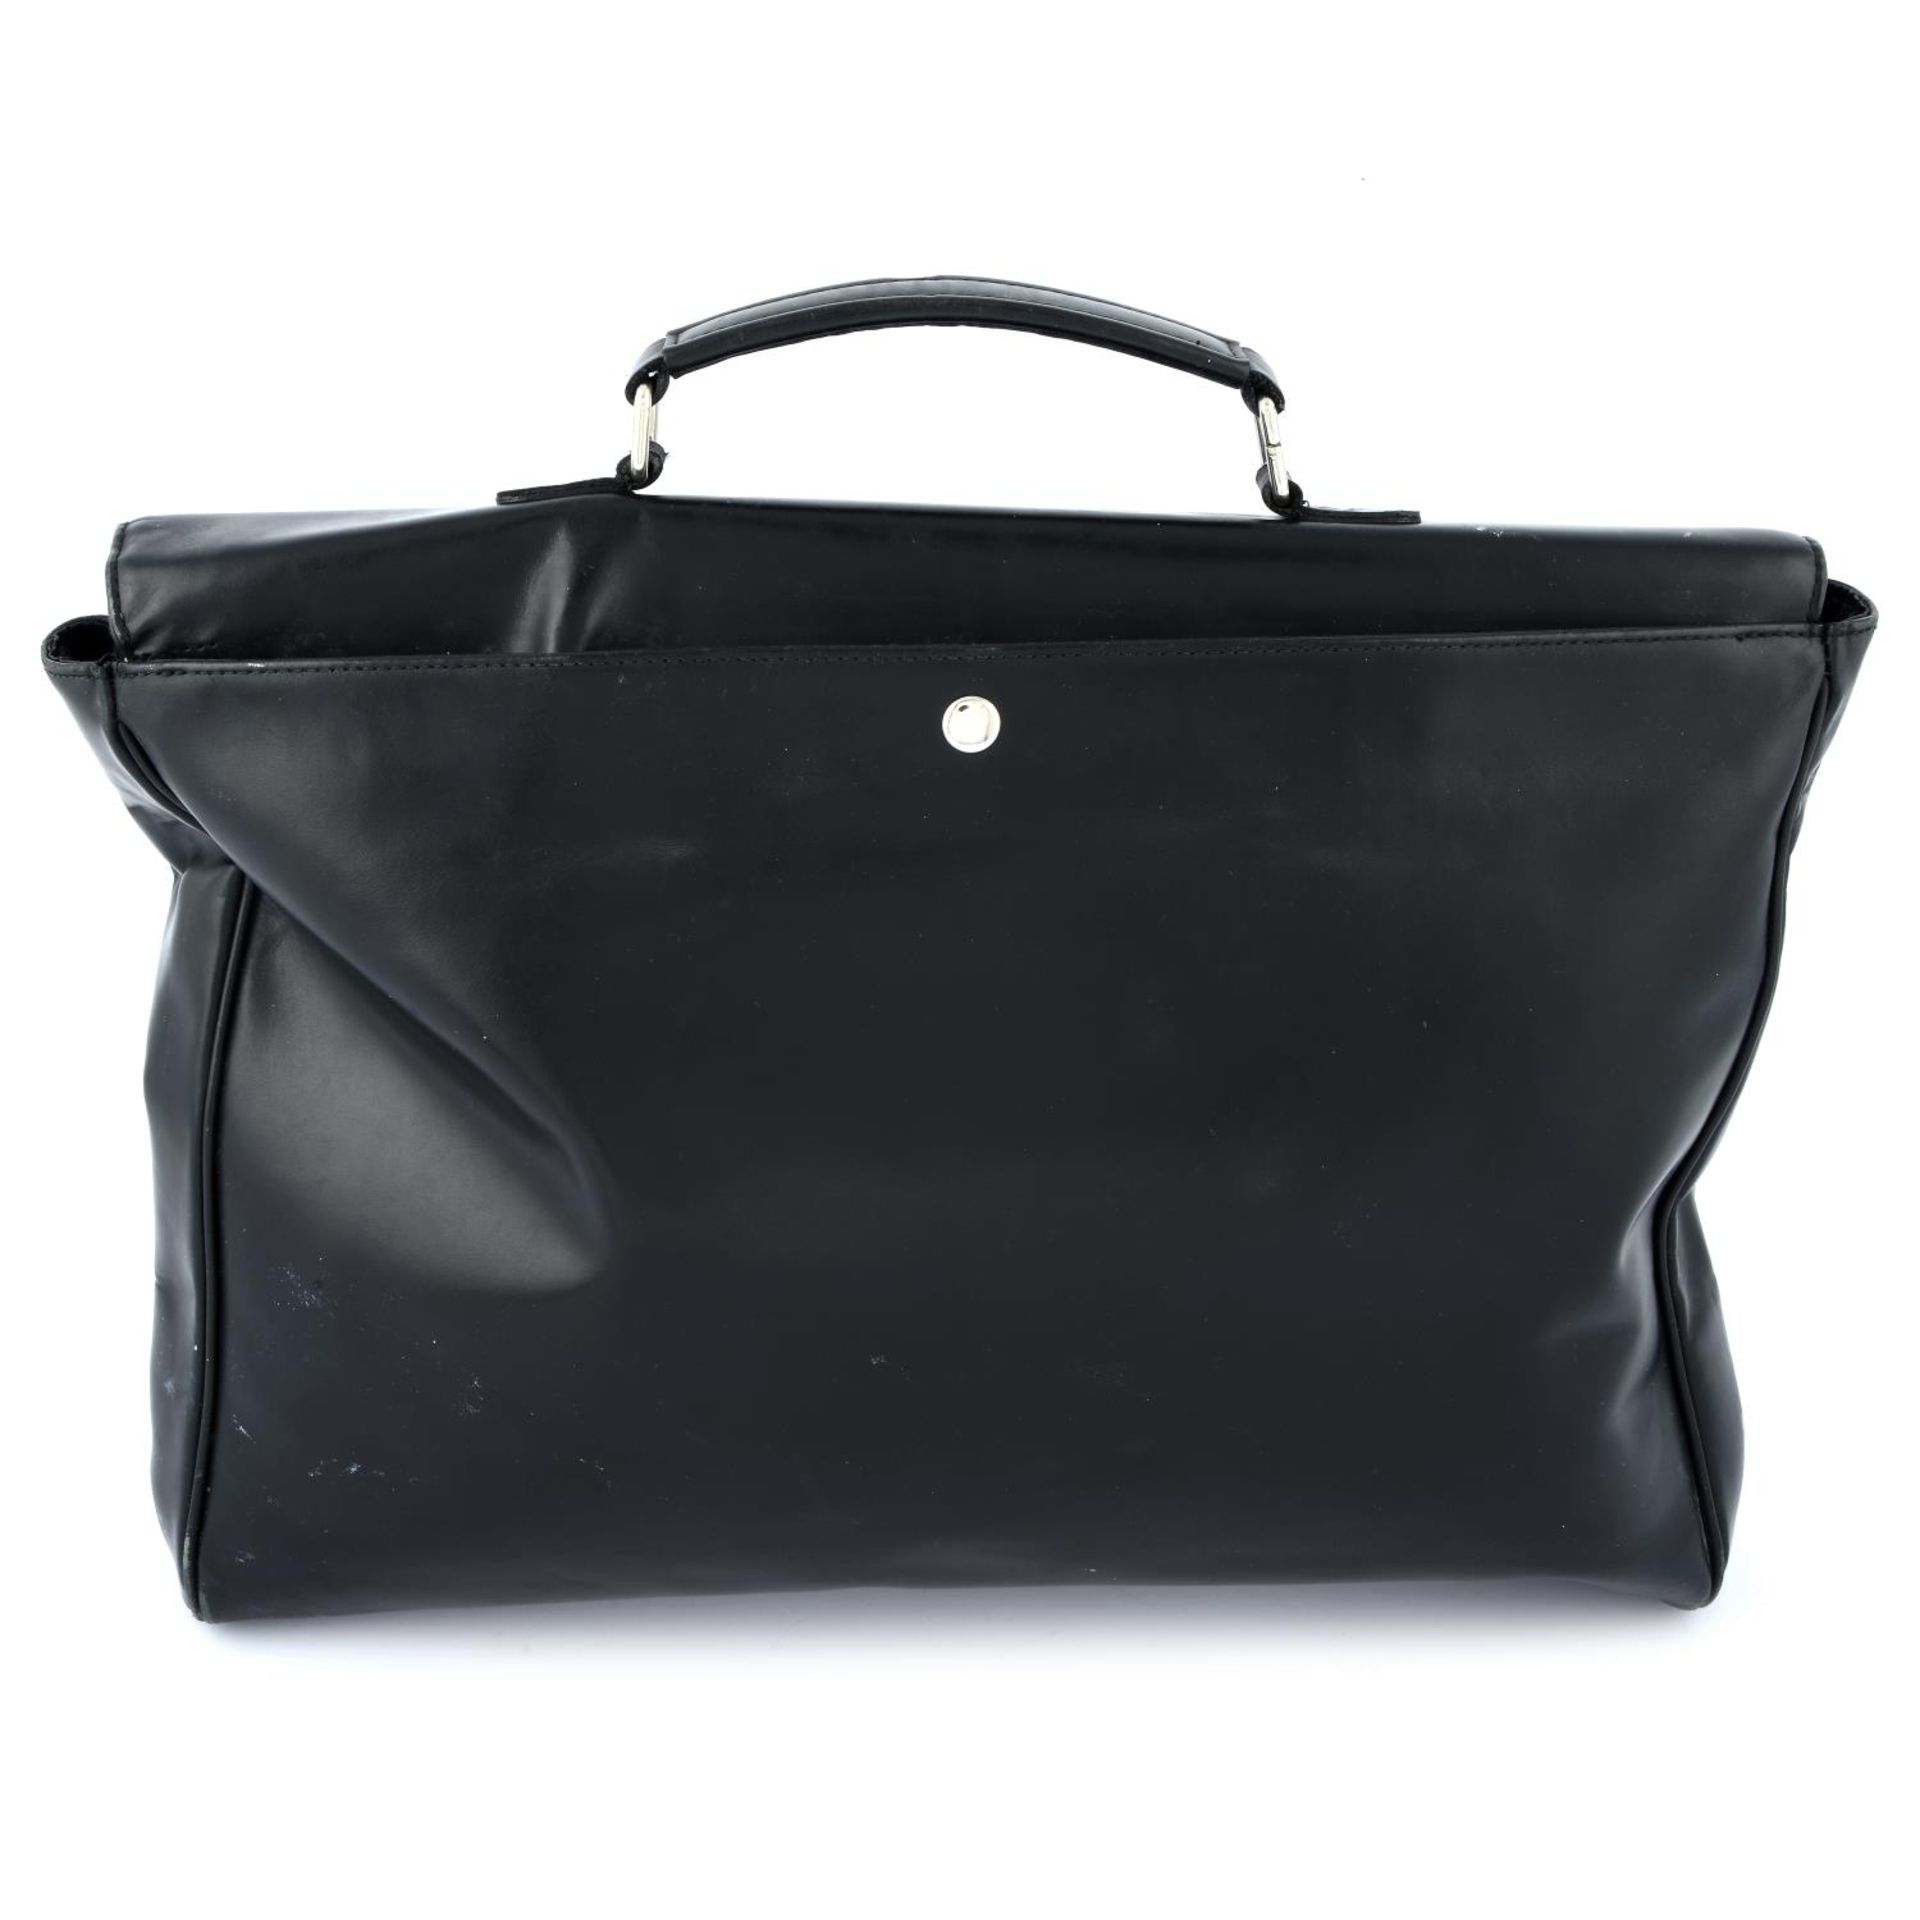 JEAN PAUL GAULTIER - a black leather handbag. - Image 2 of 4